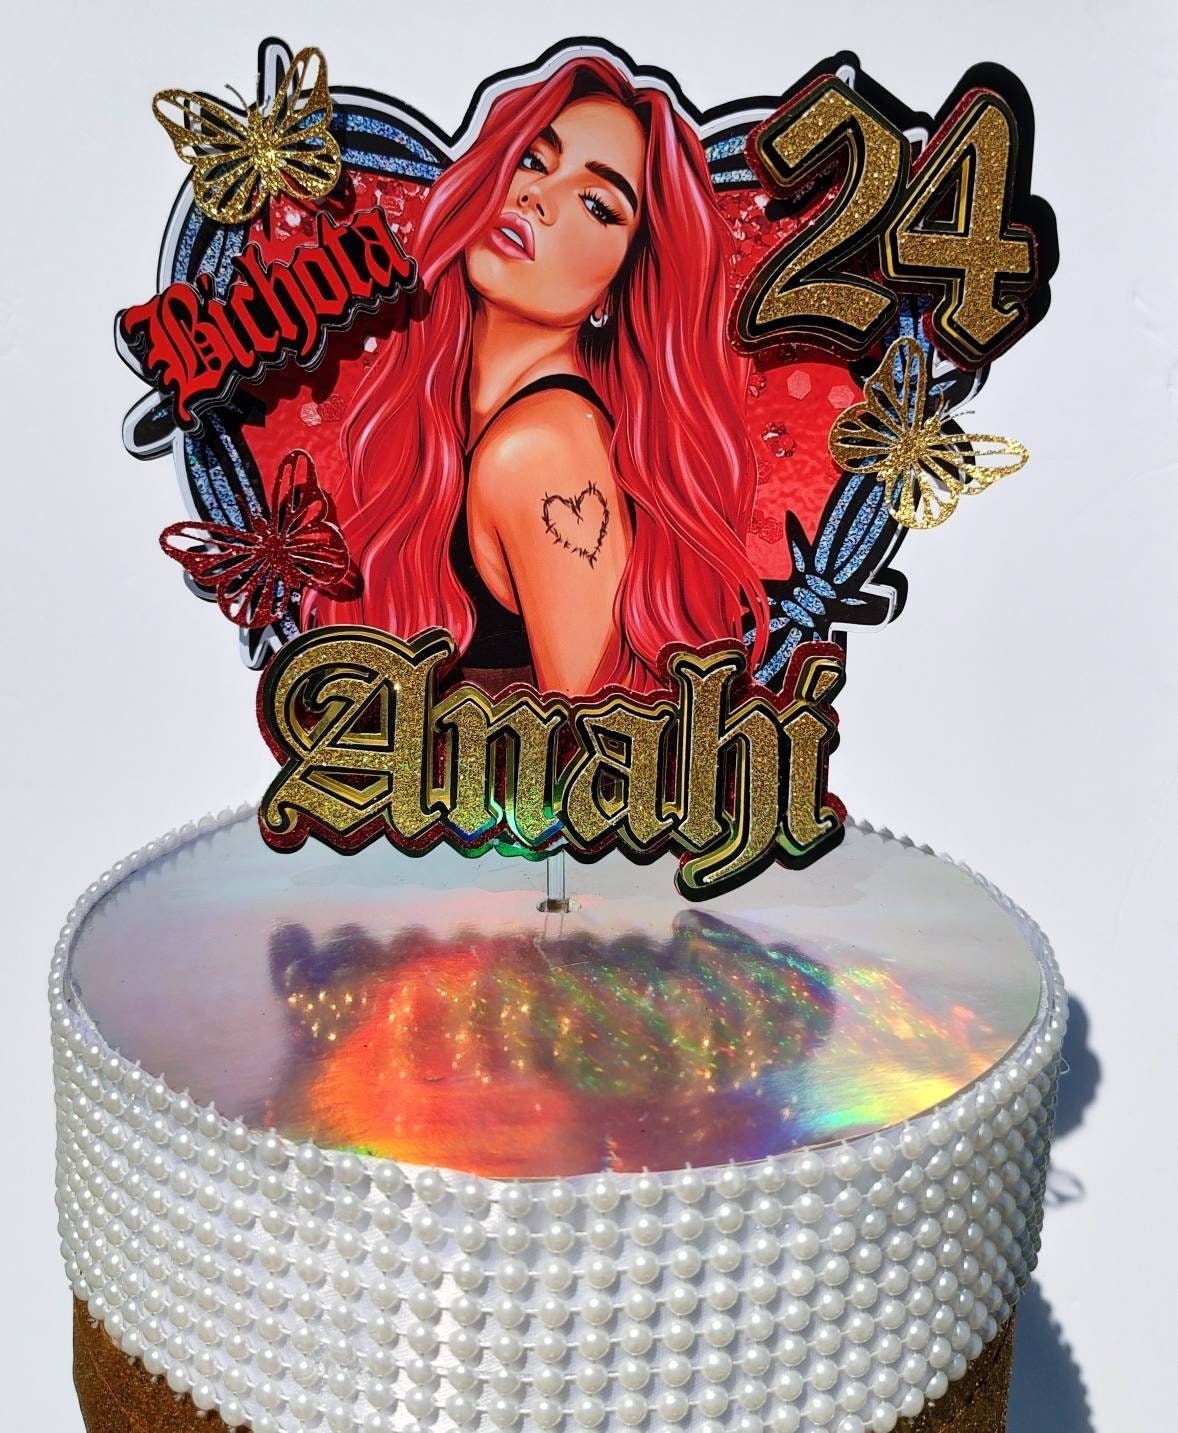 Karol G Red Hair Cup Cake Topper – ImaginingwithKat